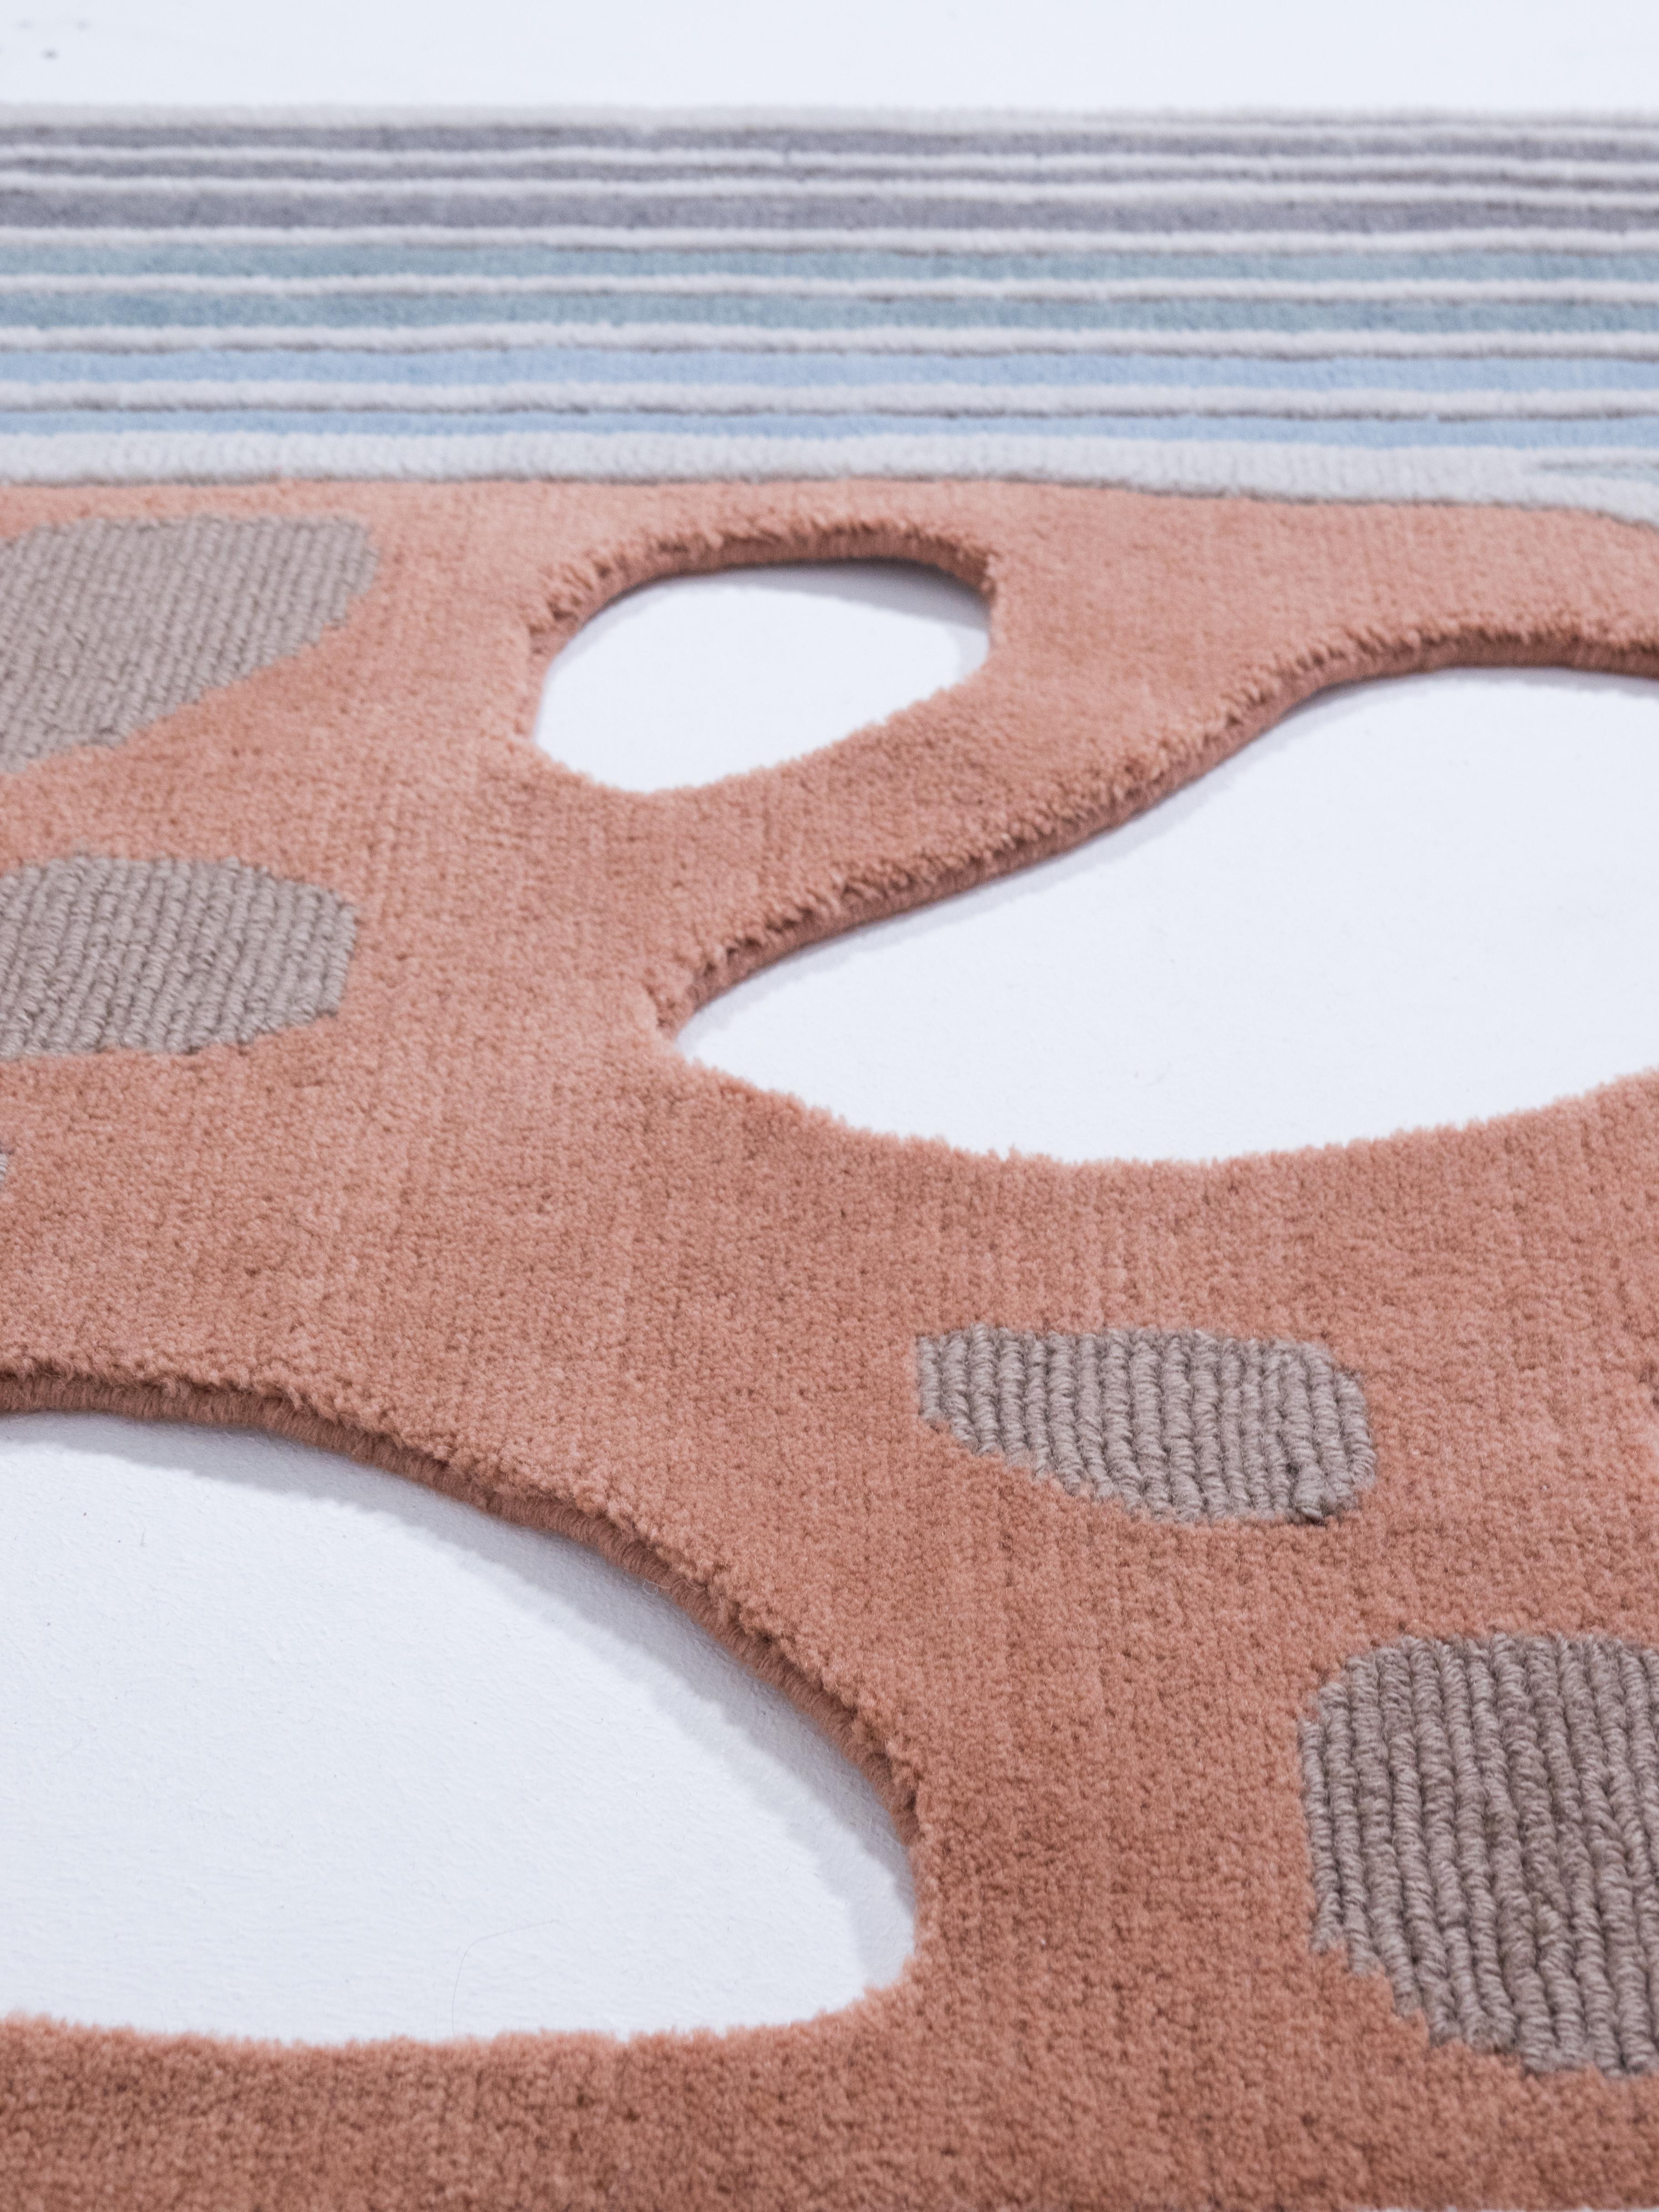 Wool Modern colofrul unusual rug Multicolored Irregular shape, Gamma Est small For Sale